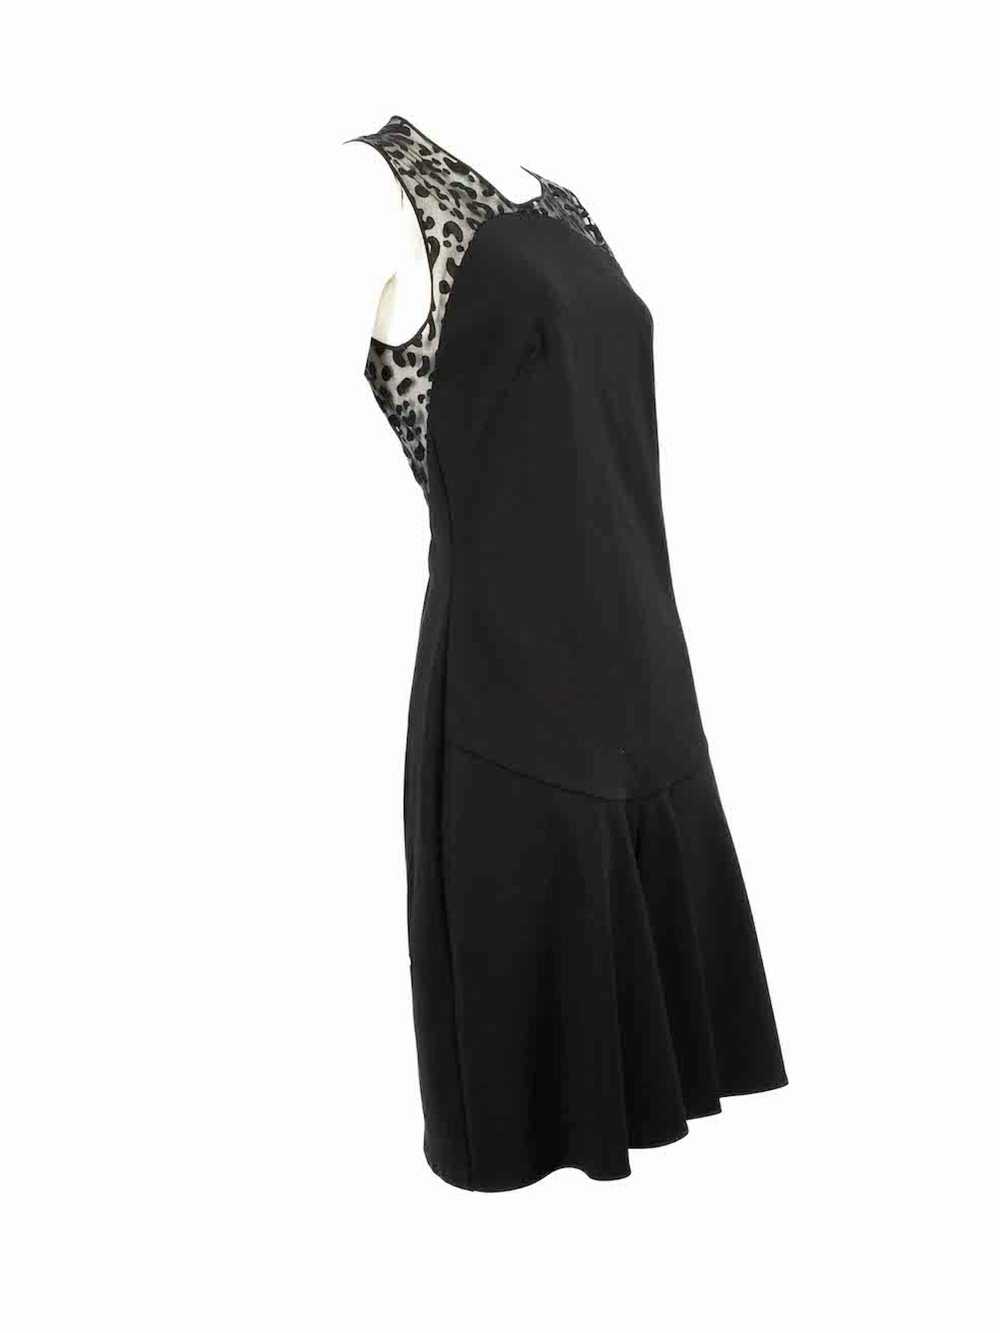 Stella McCartney Black Crew Neck Sleeveless Dress - image 2